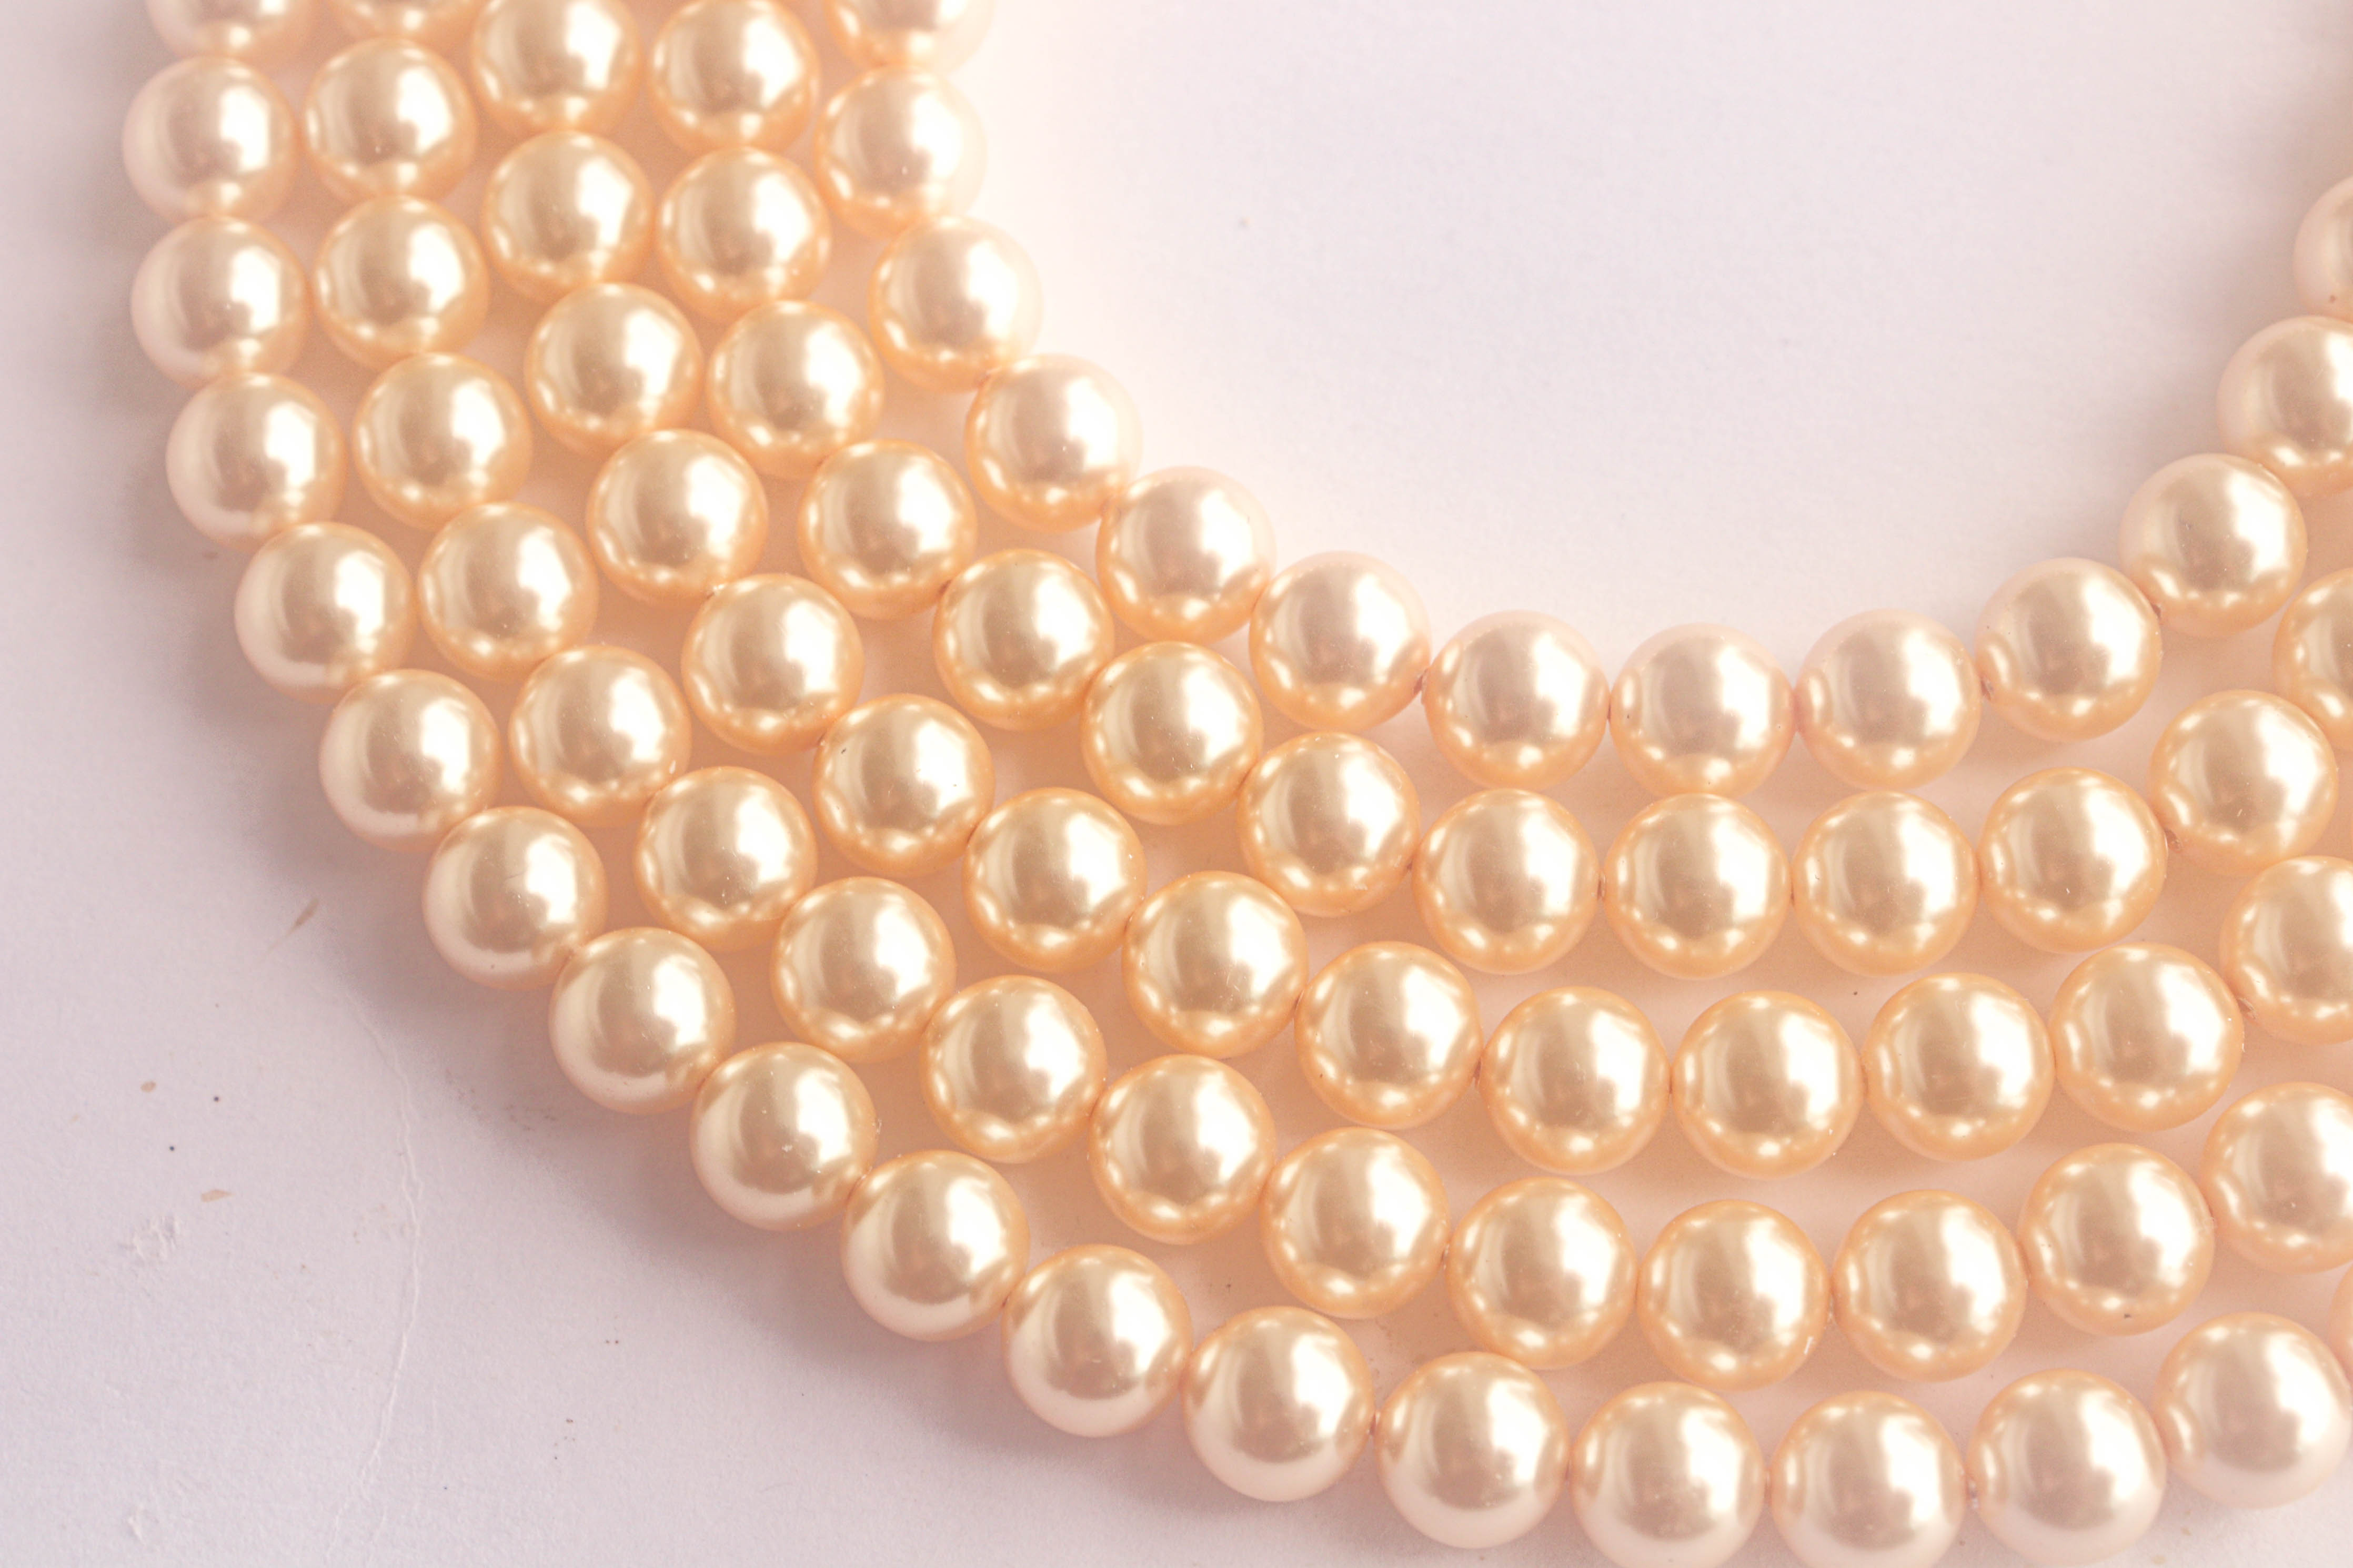 10mm Crystal Light Gold (001 539) Genuine Swarovski 5810 Pearls Round Beads Beadsforyourjewelry